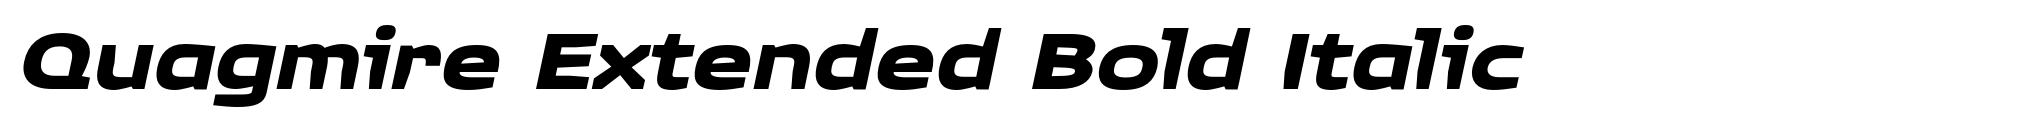 Quagmire Extended Bold Italic image